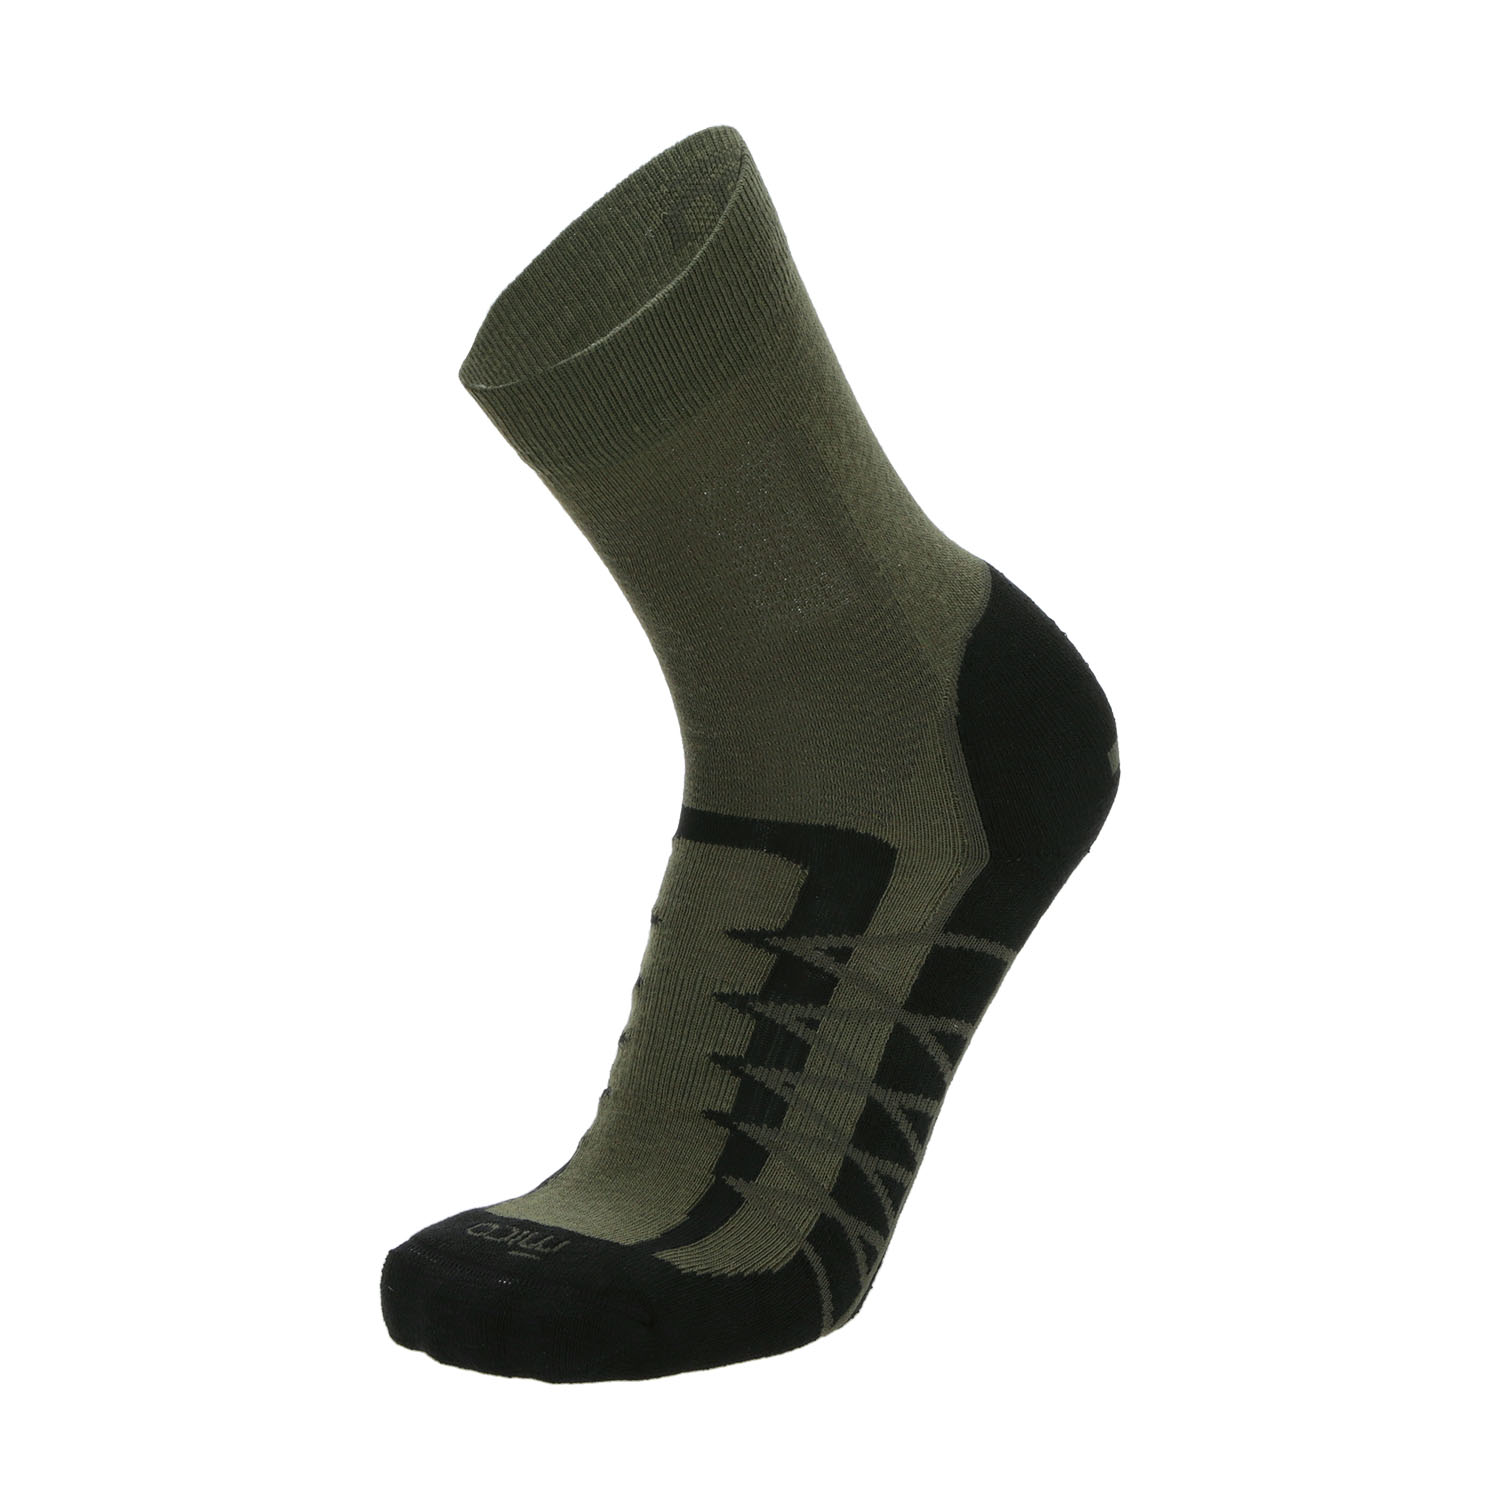 Mico Extra Dry Outlast Medium Weight Socks - Muschio